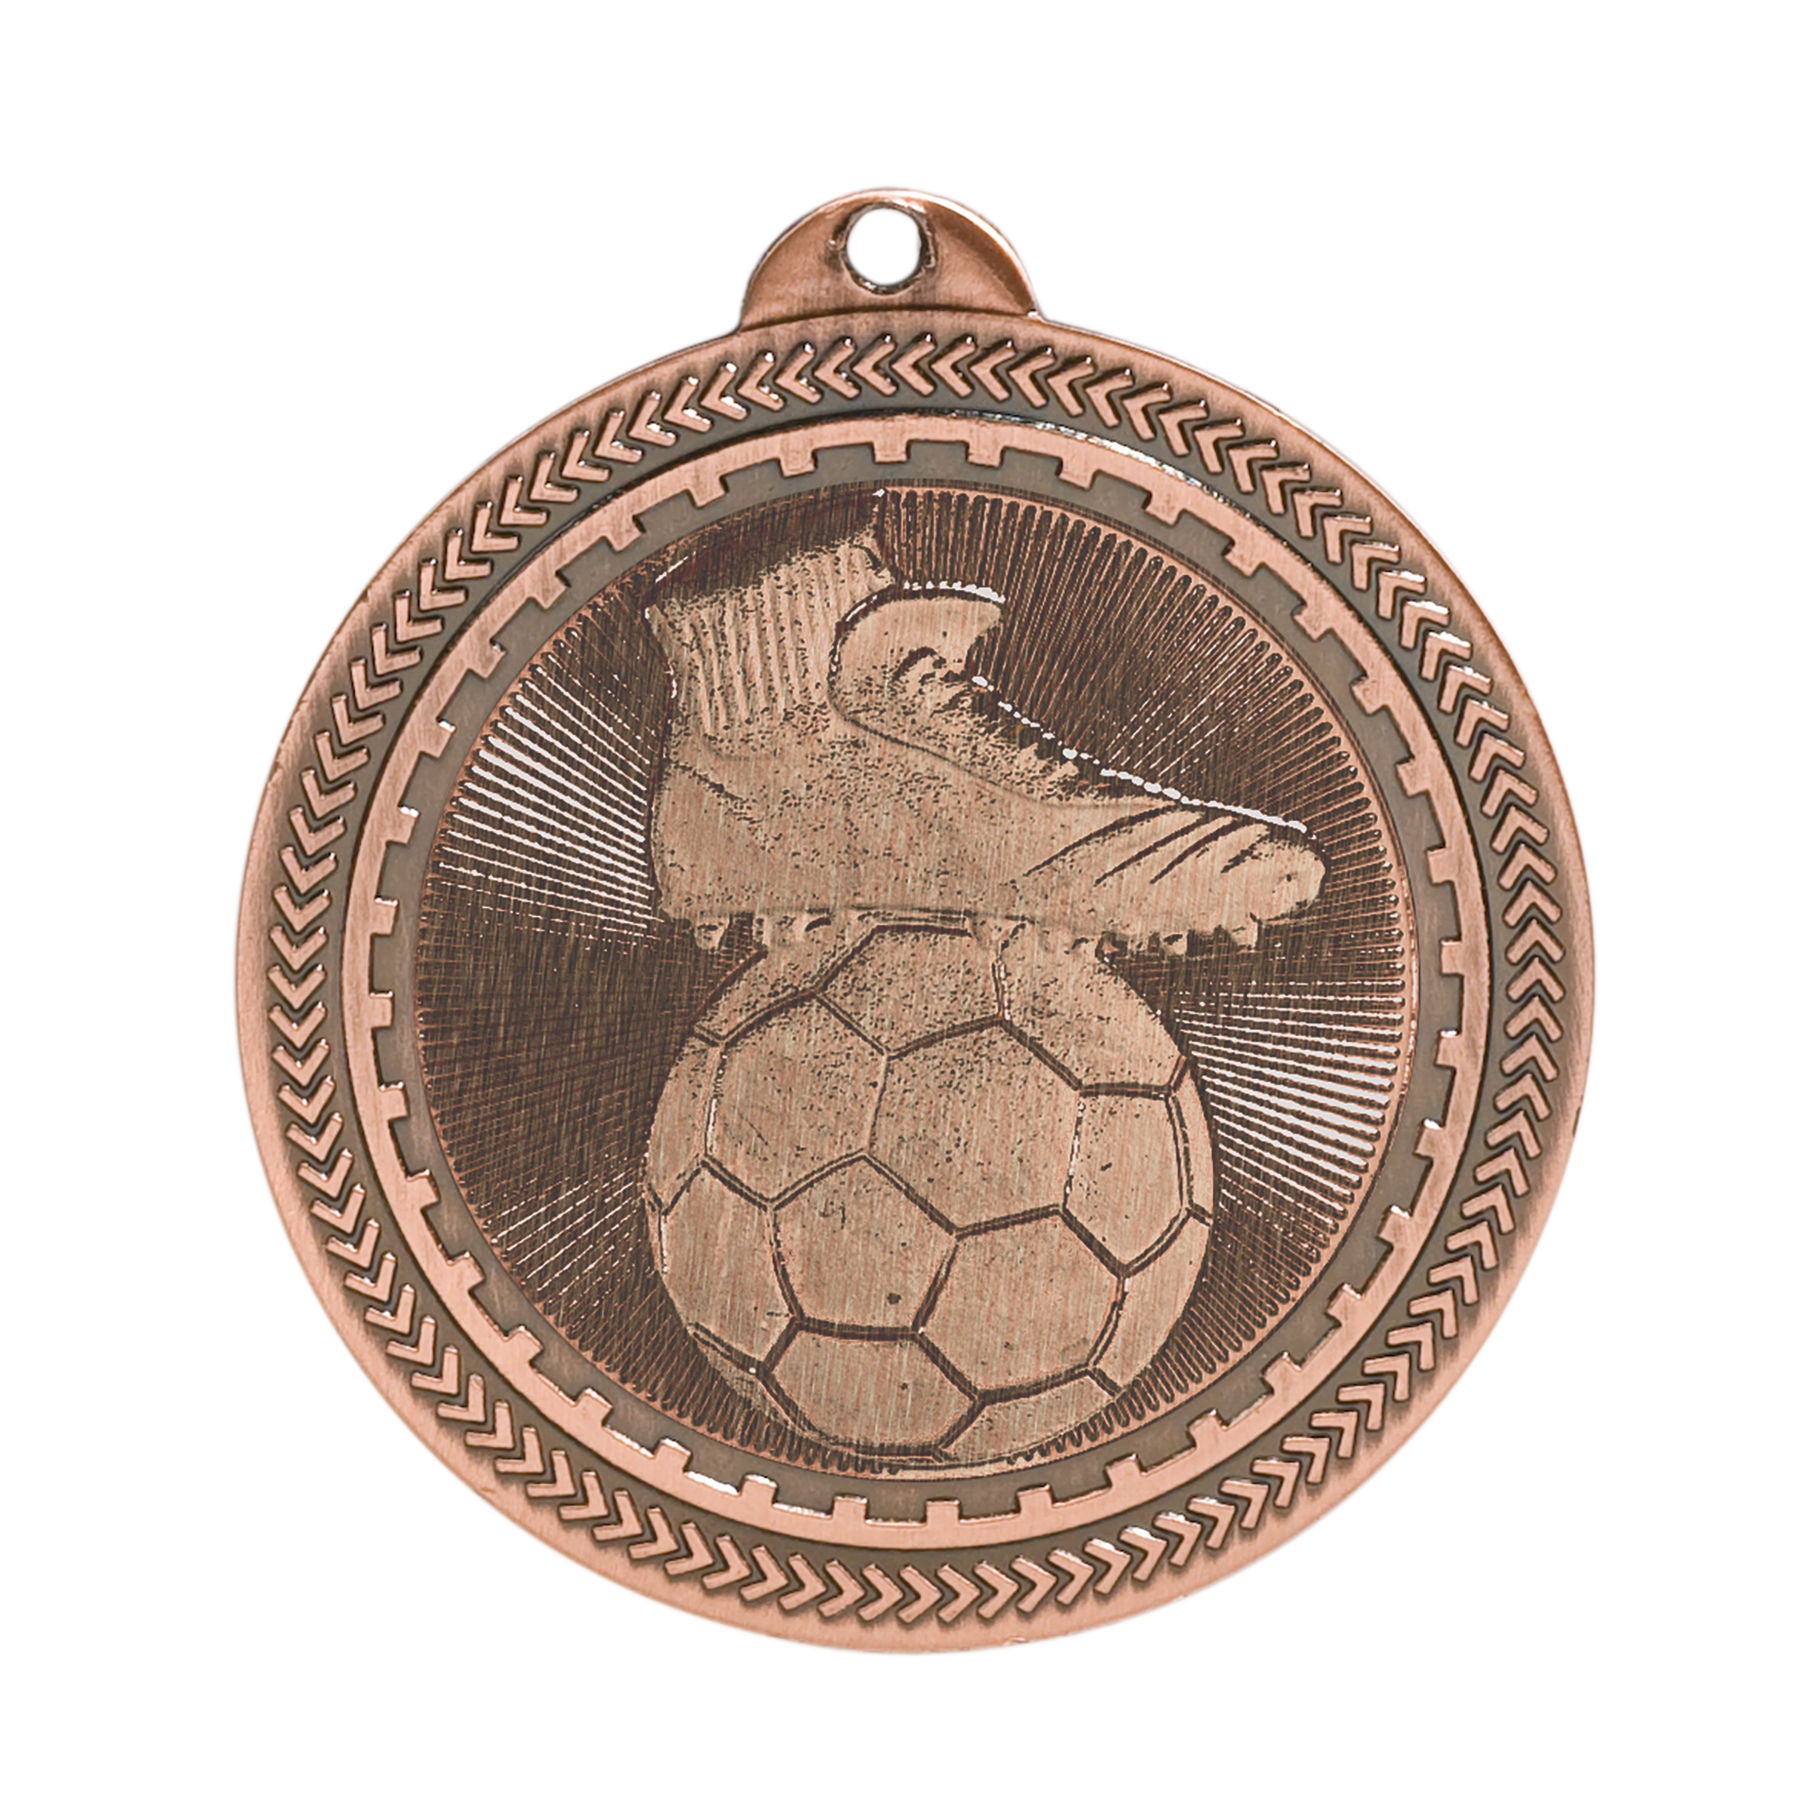 Soccer Laserable BriteLazer Medal, 2" - Craftworks NW, LLC